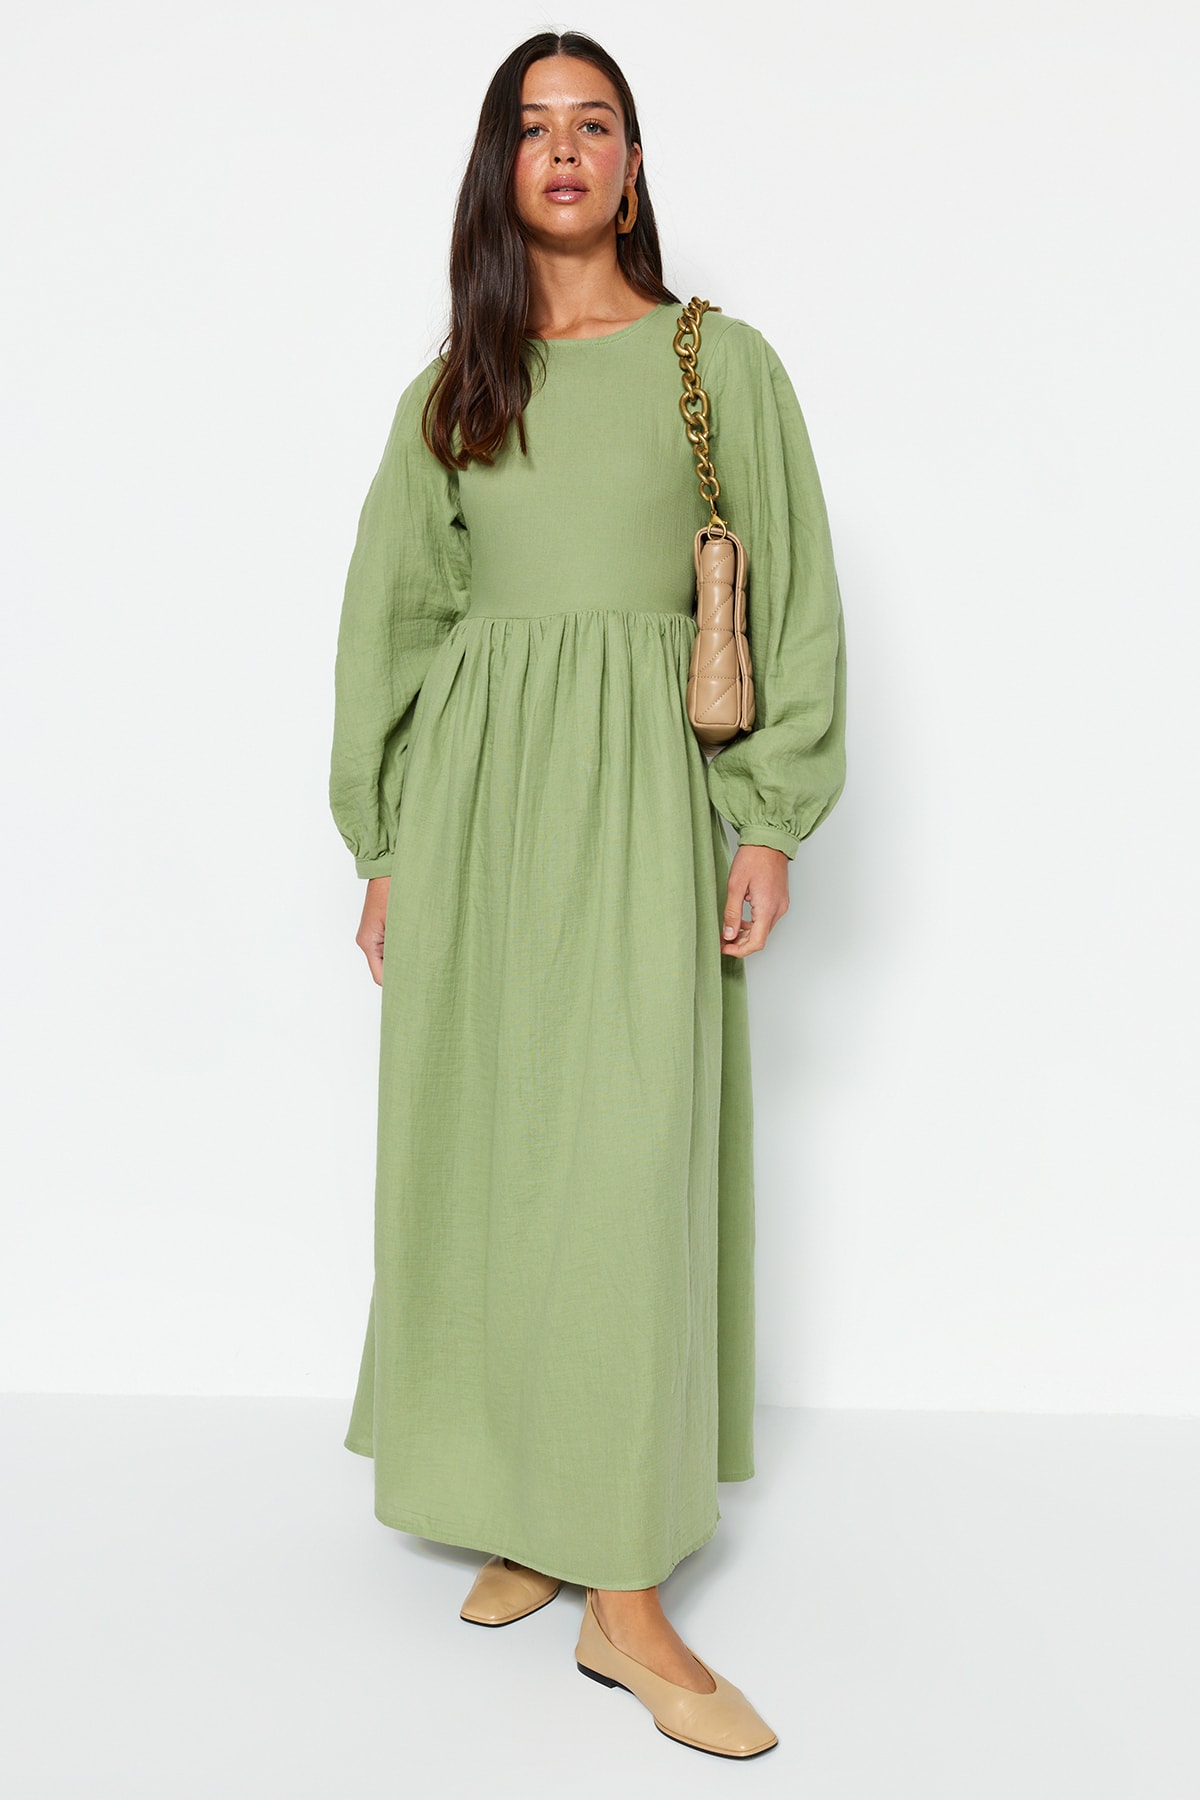 Trendyol Khaki Belted Comfort Fit Lined Muslin 100% Cotton Woven Dress